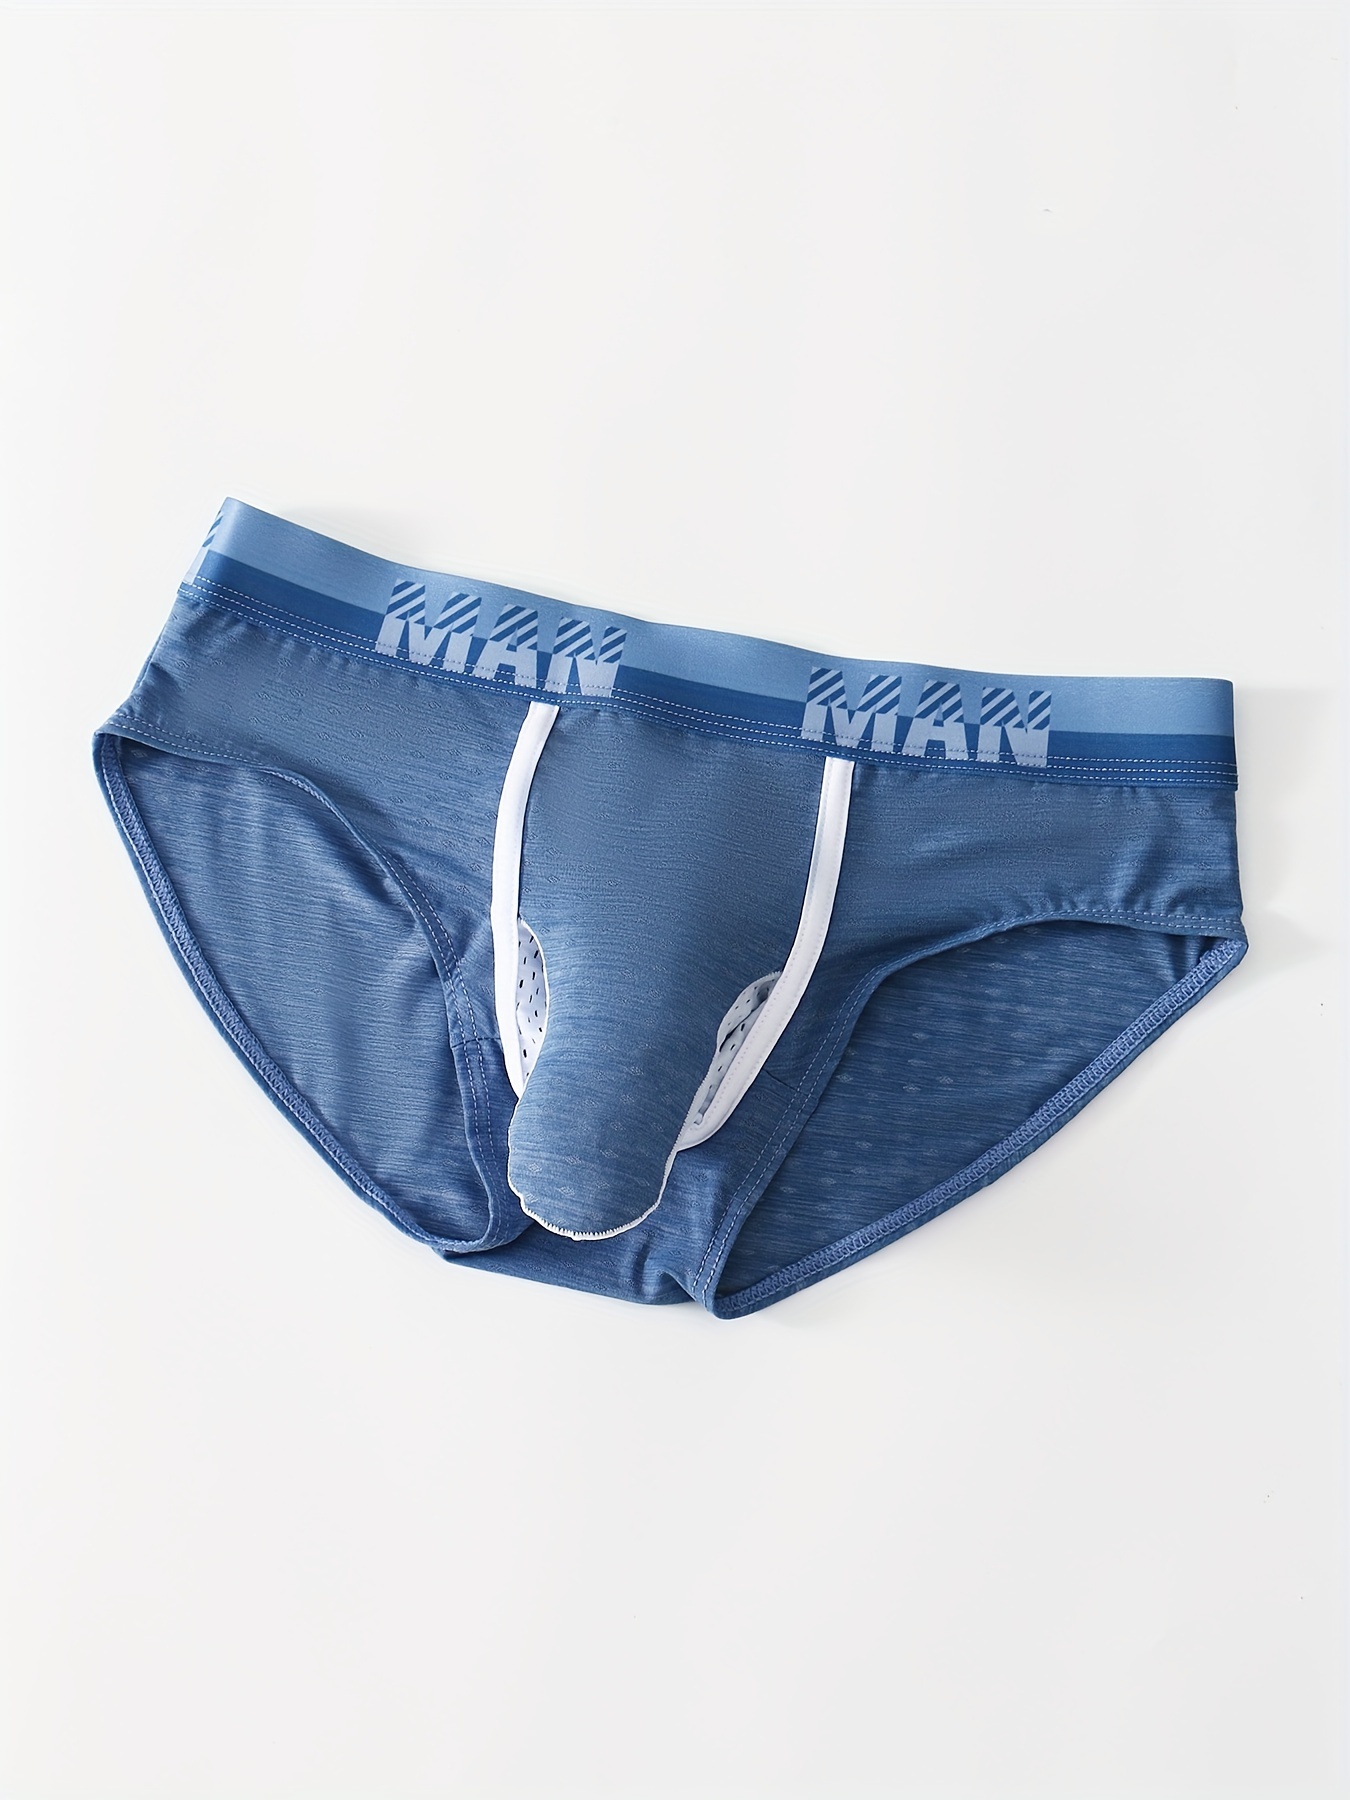 See Through Men Underpants Solid Color Mesh Yarn Mid Waist Transparent  Underwear